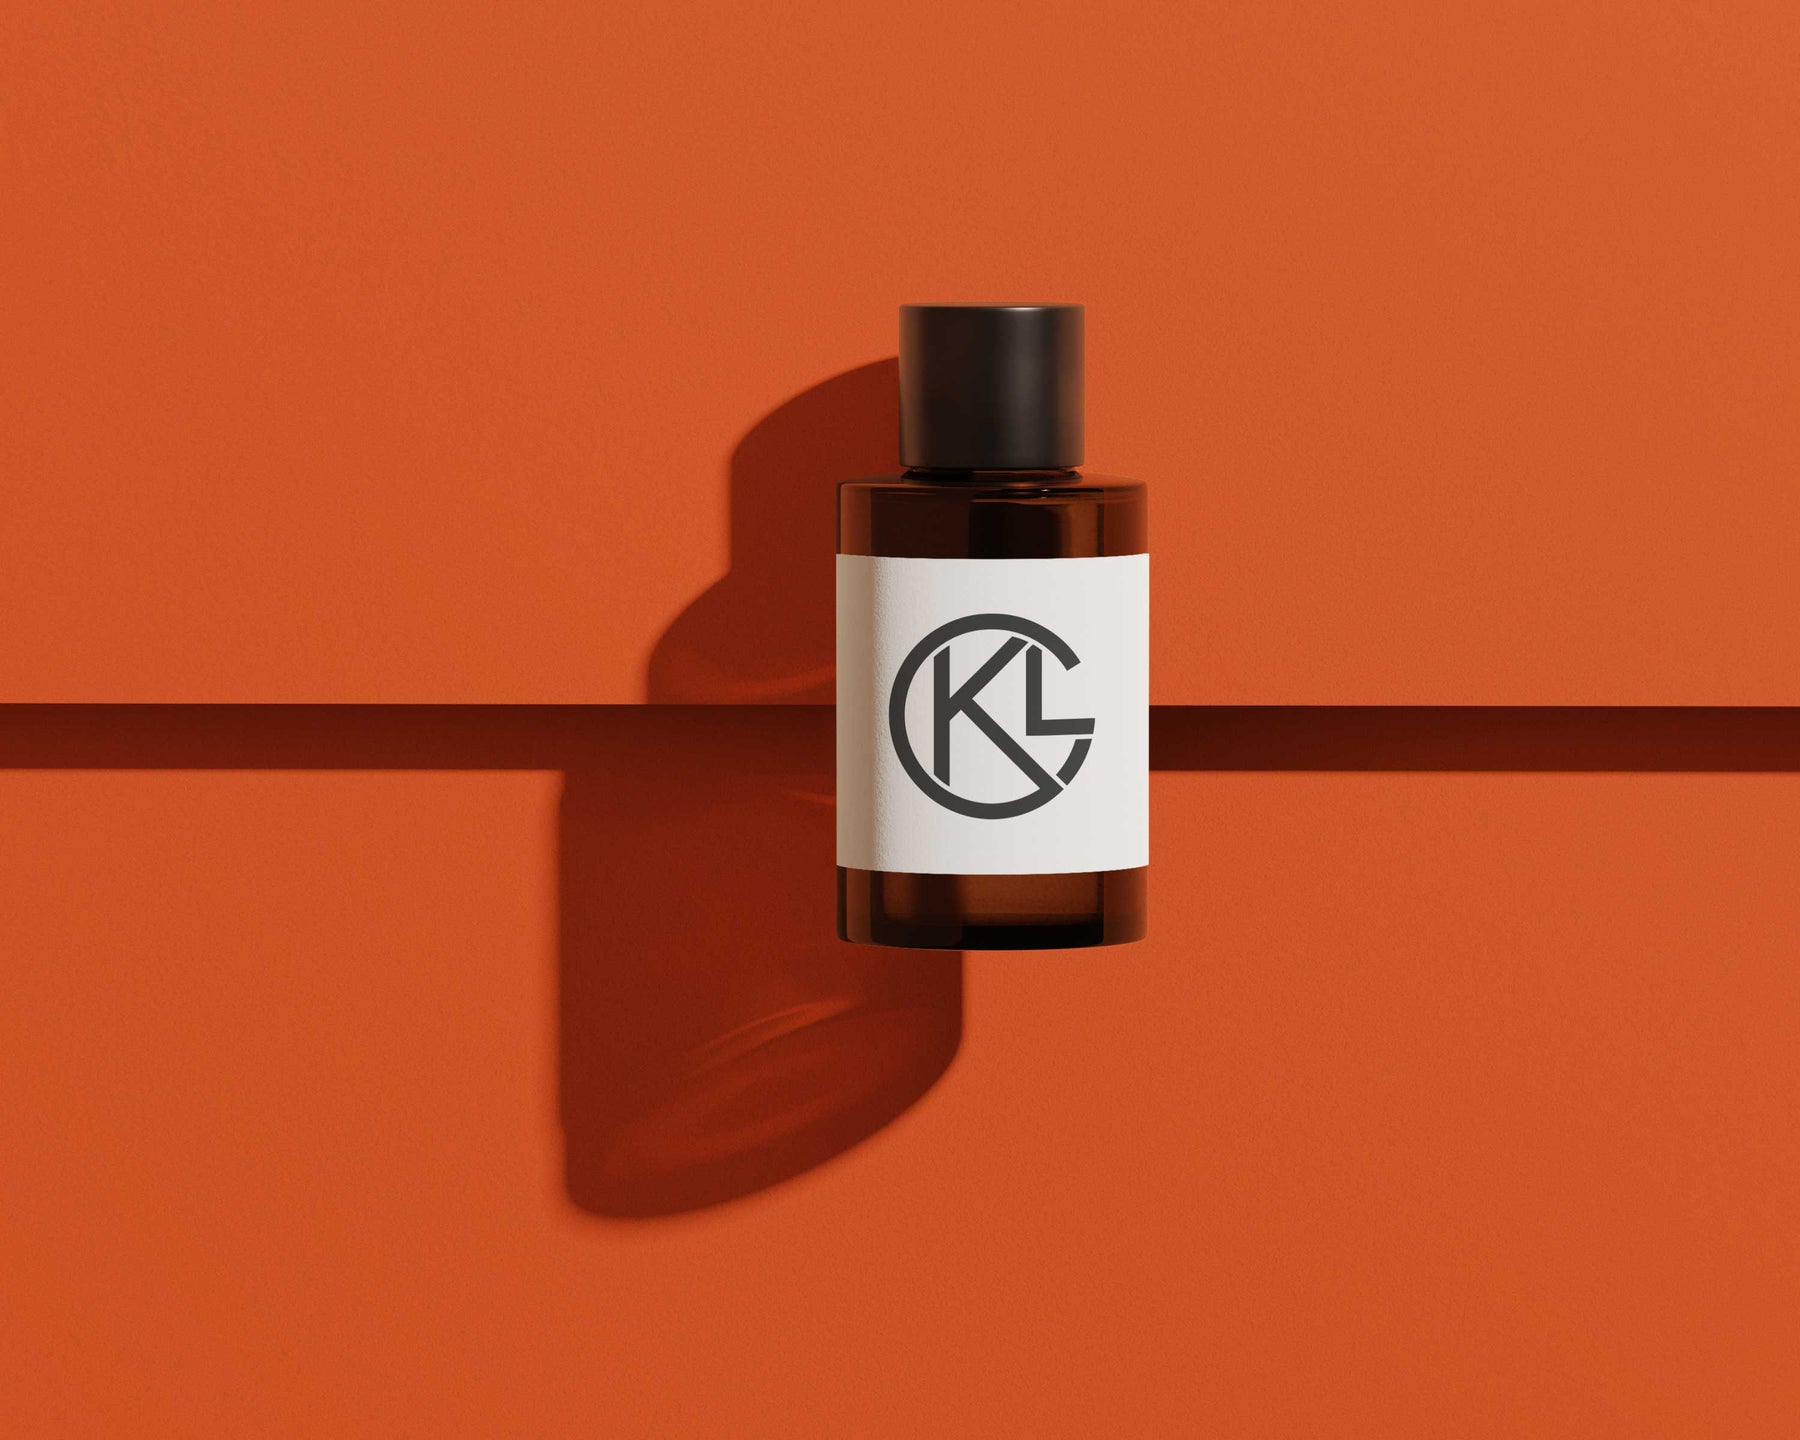 Klotz Grassinger product against red background